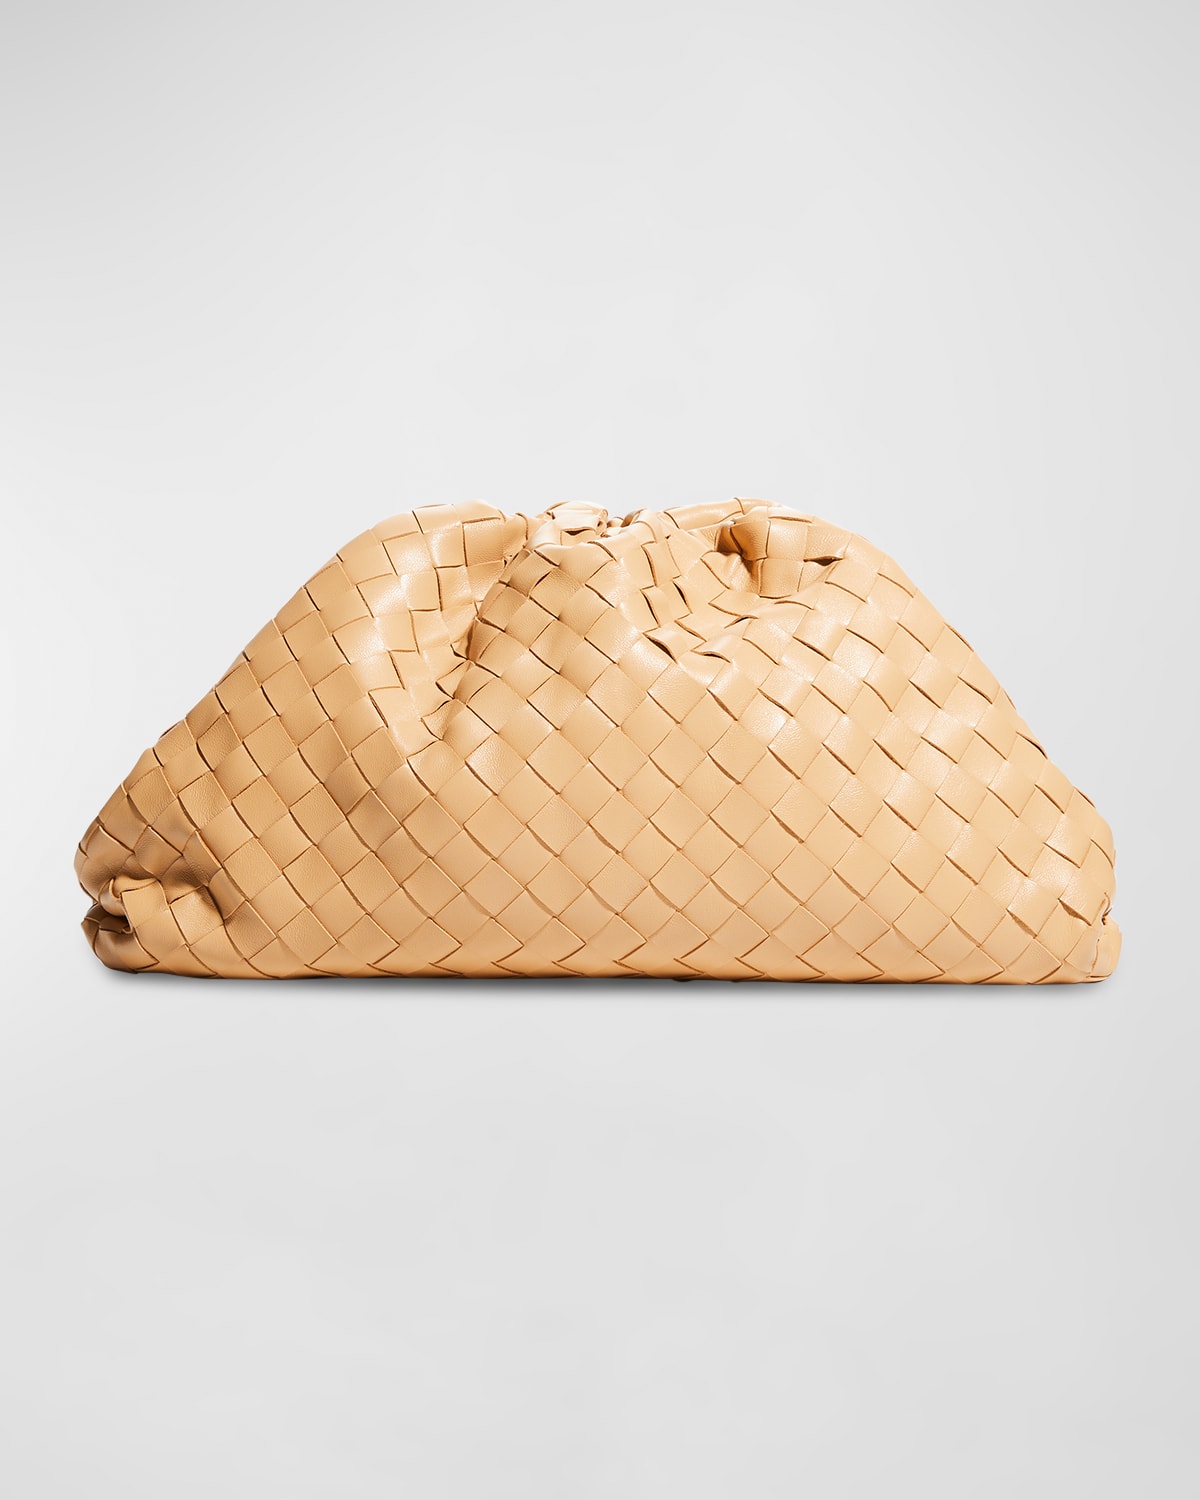 Bottega Veneta Signature Bag | Neiman Marcus